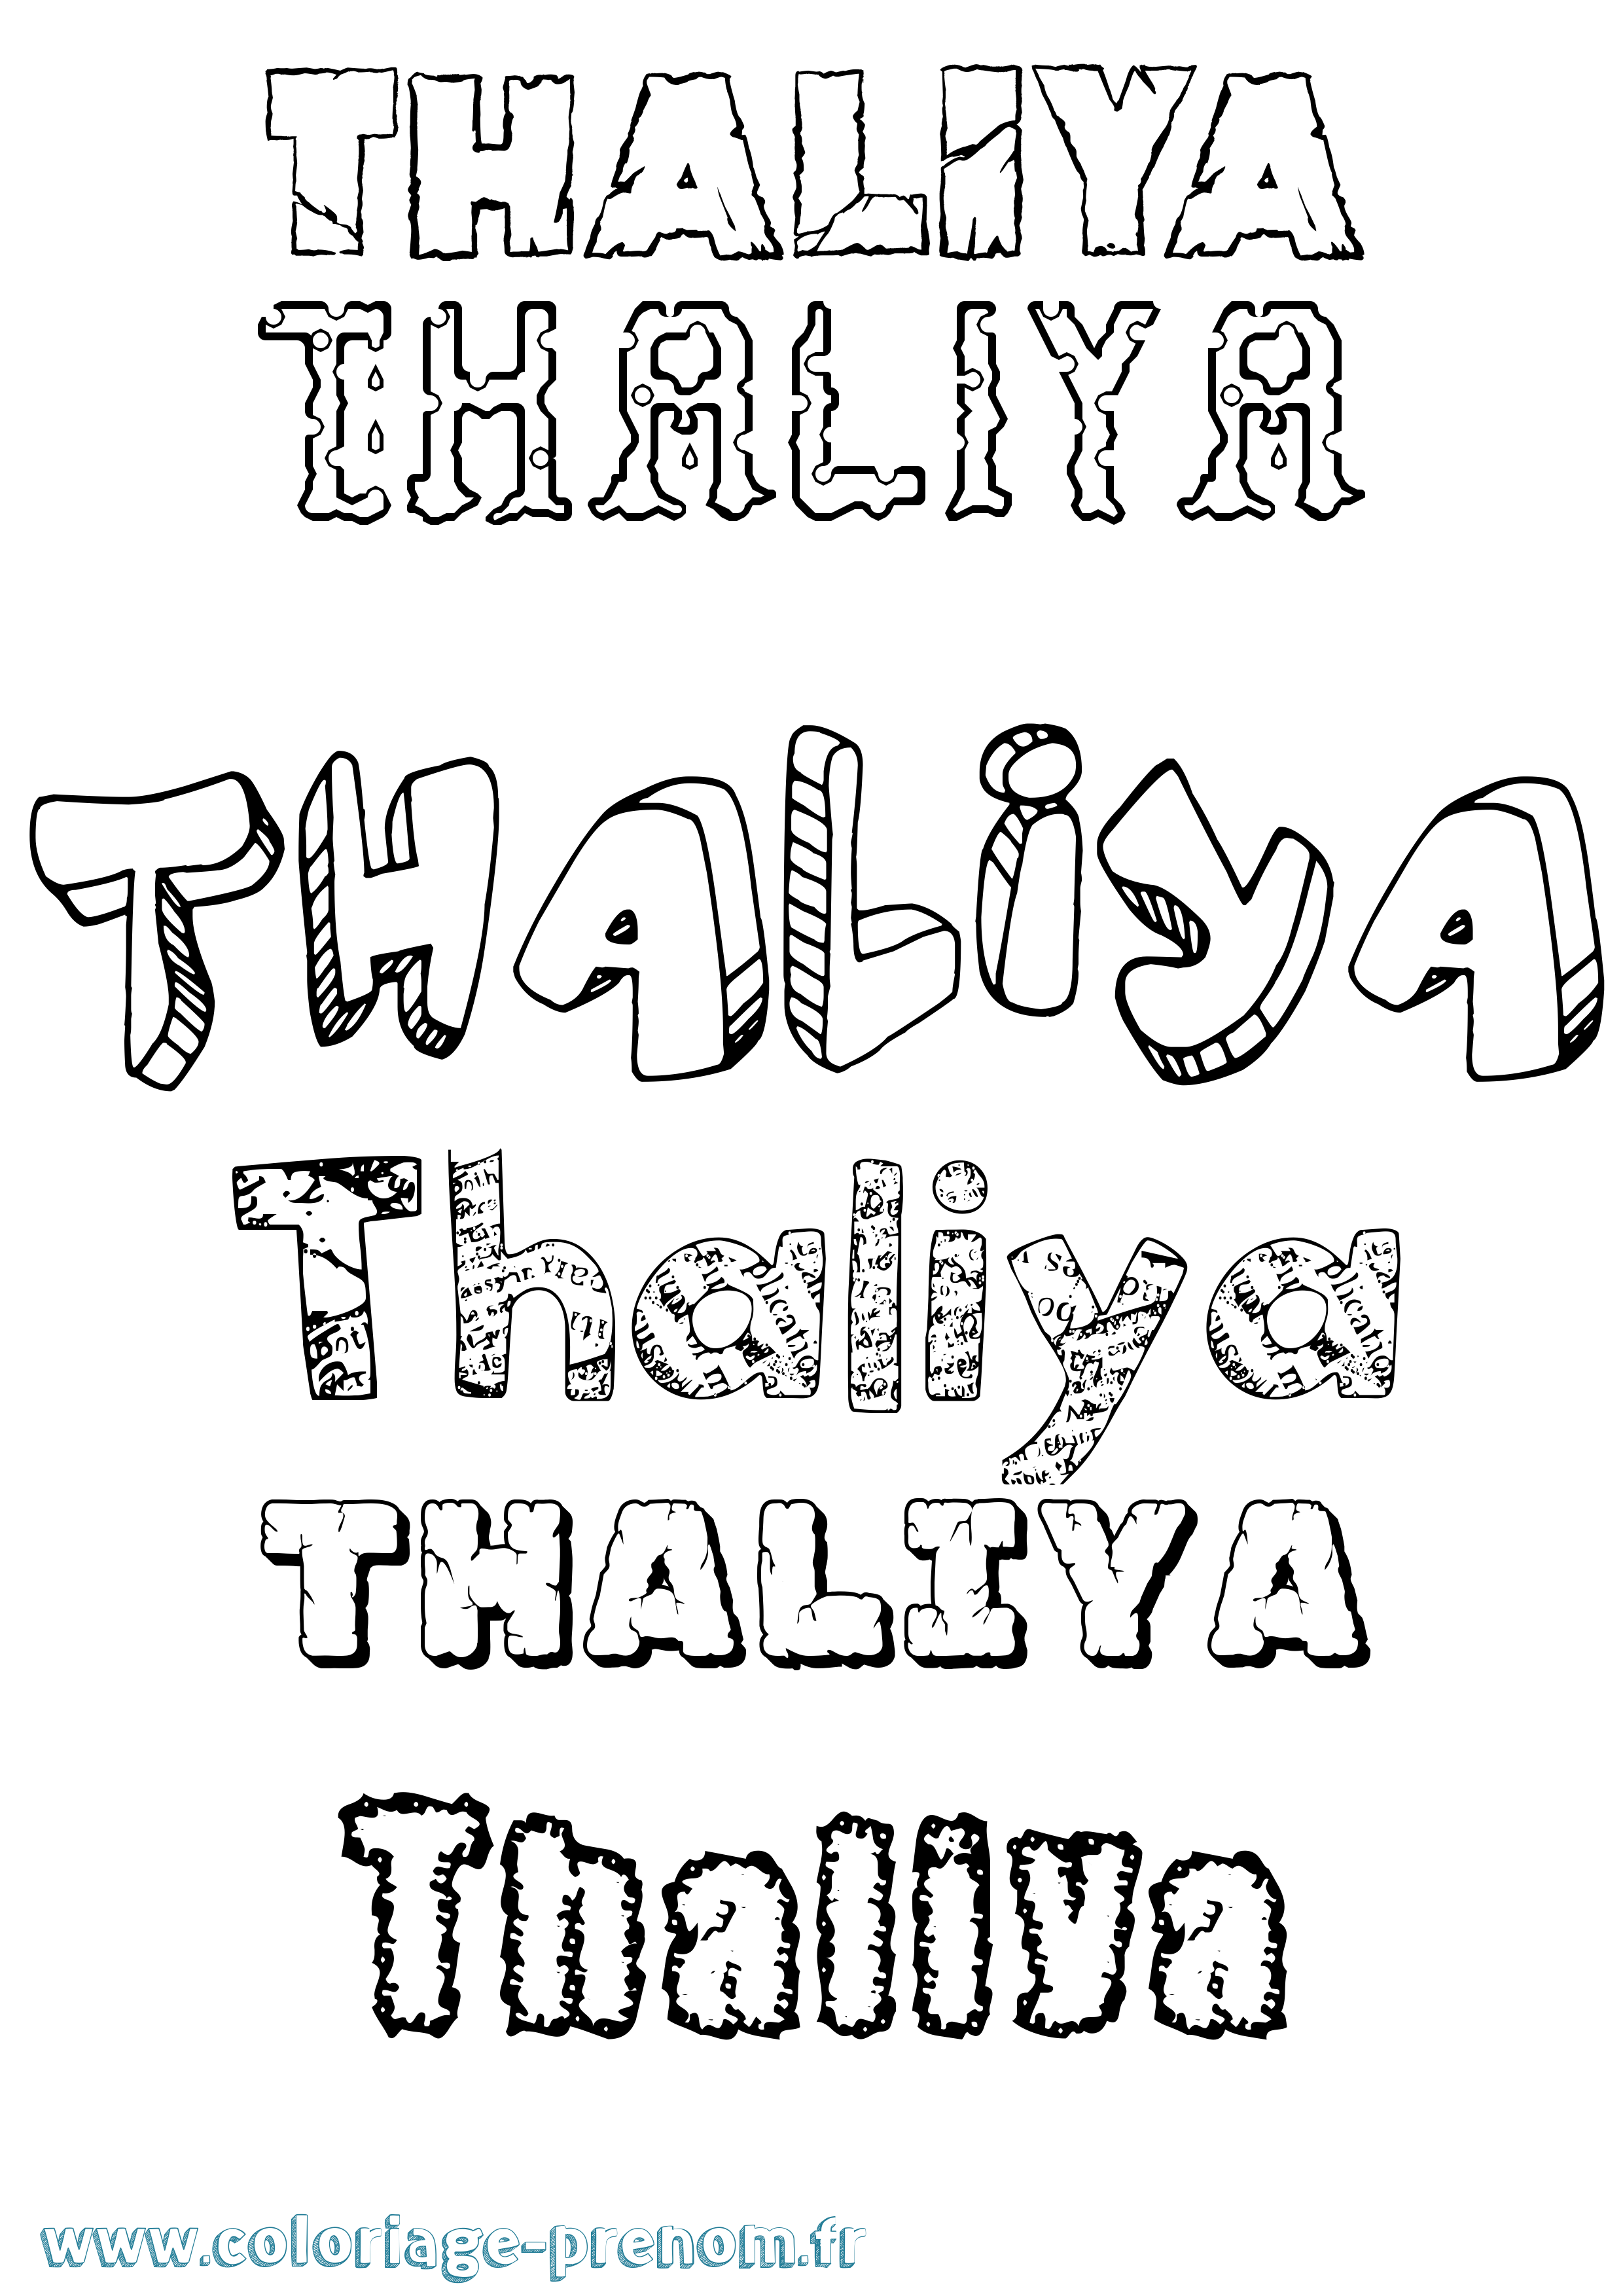 Coloriage prénom Thaliya Destructuré